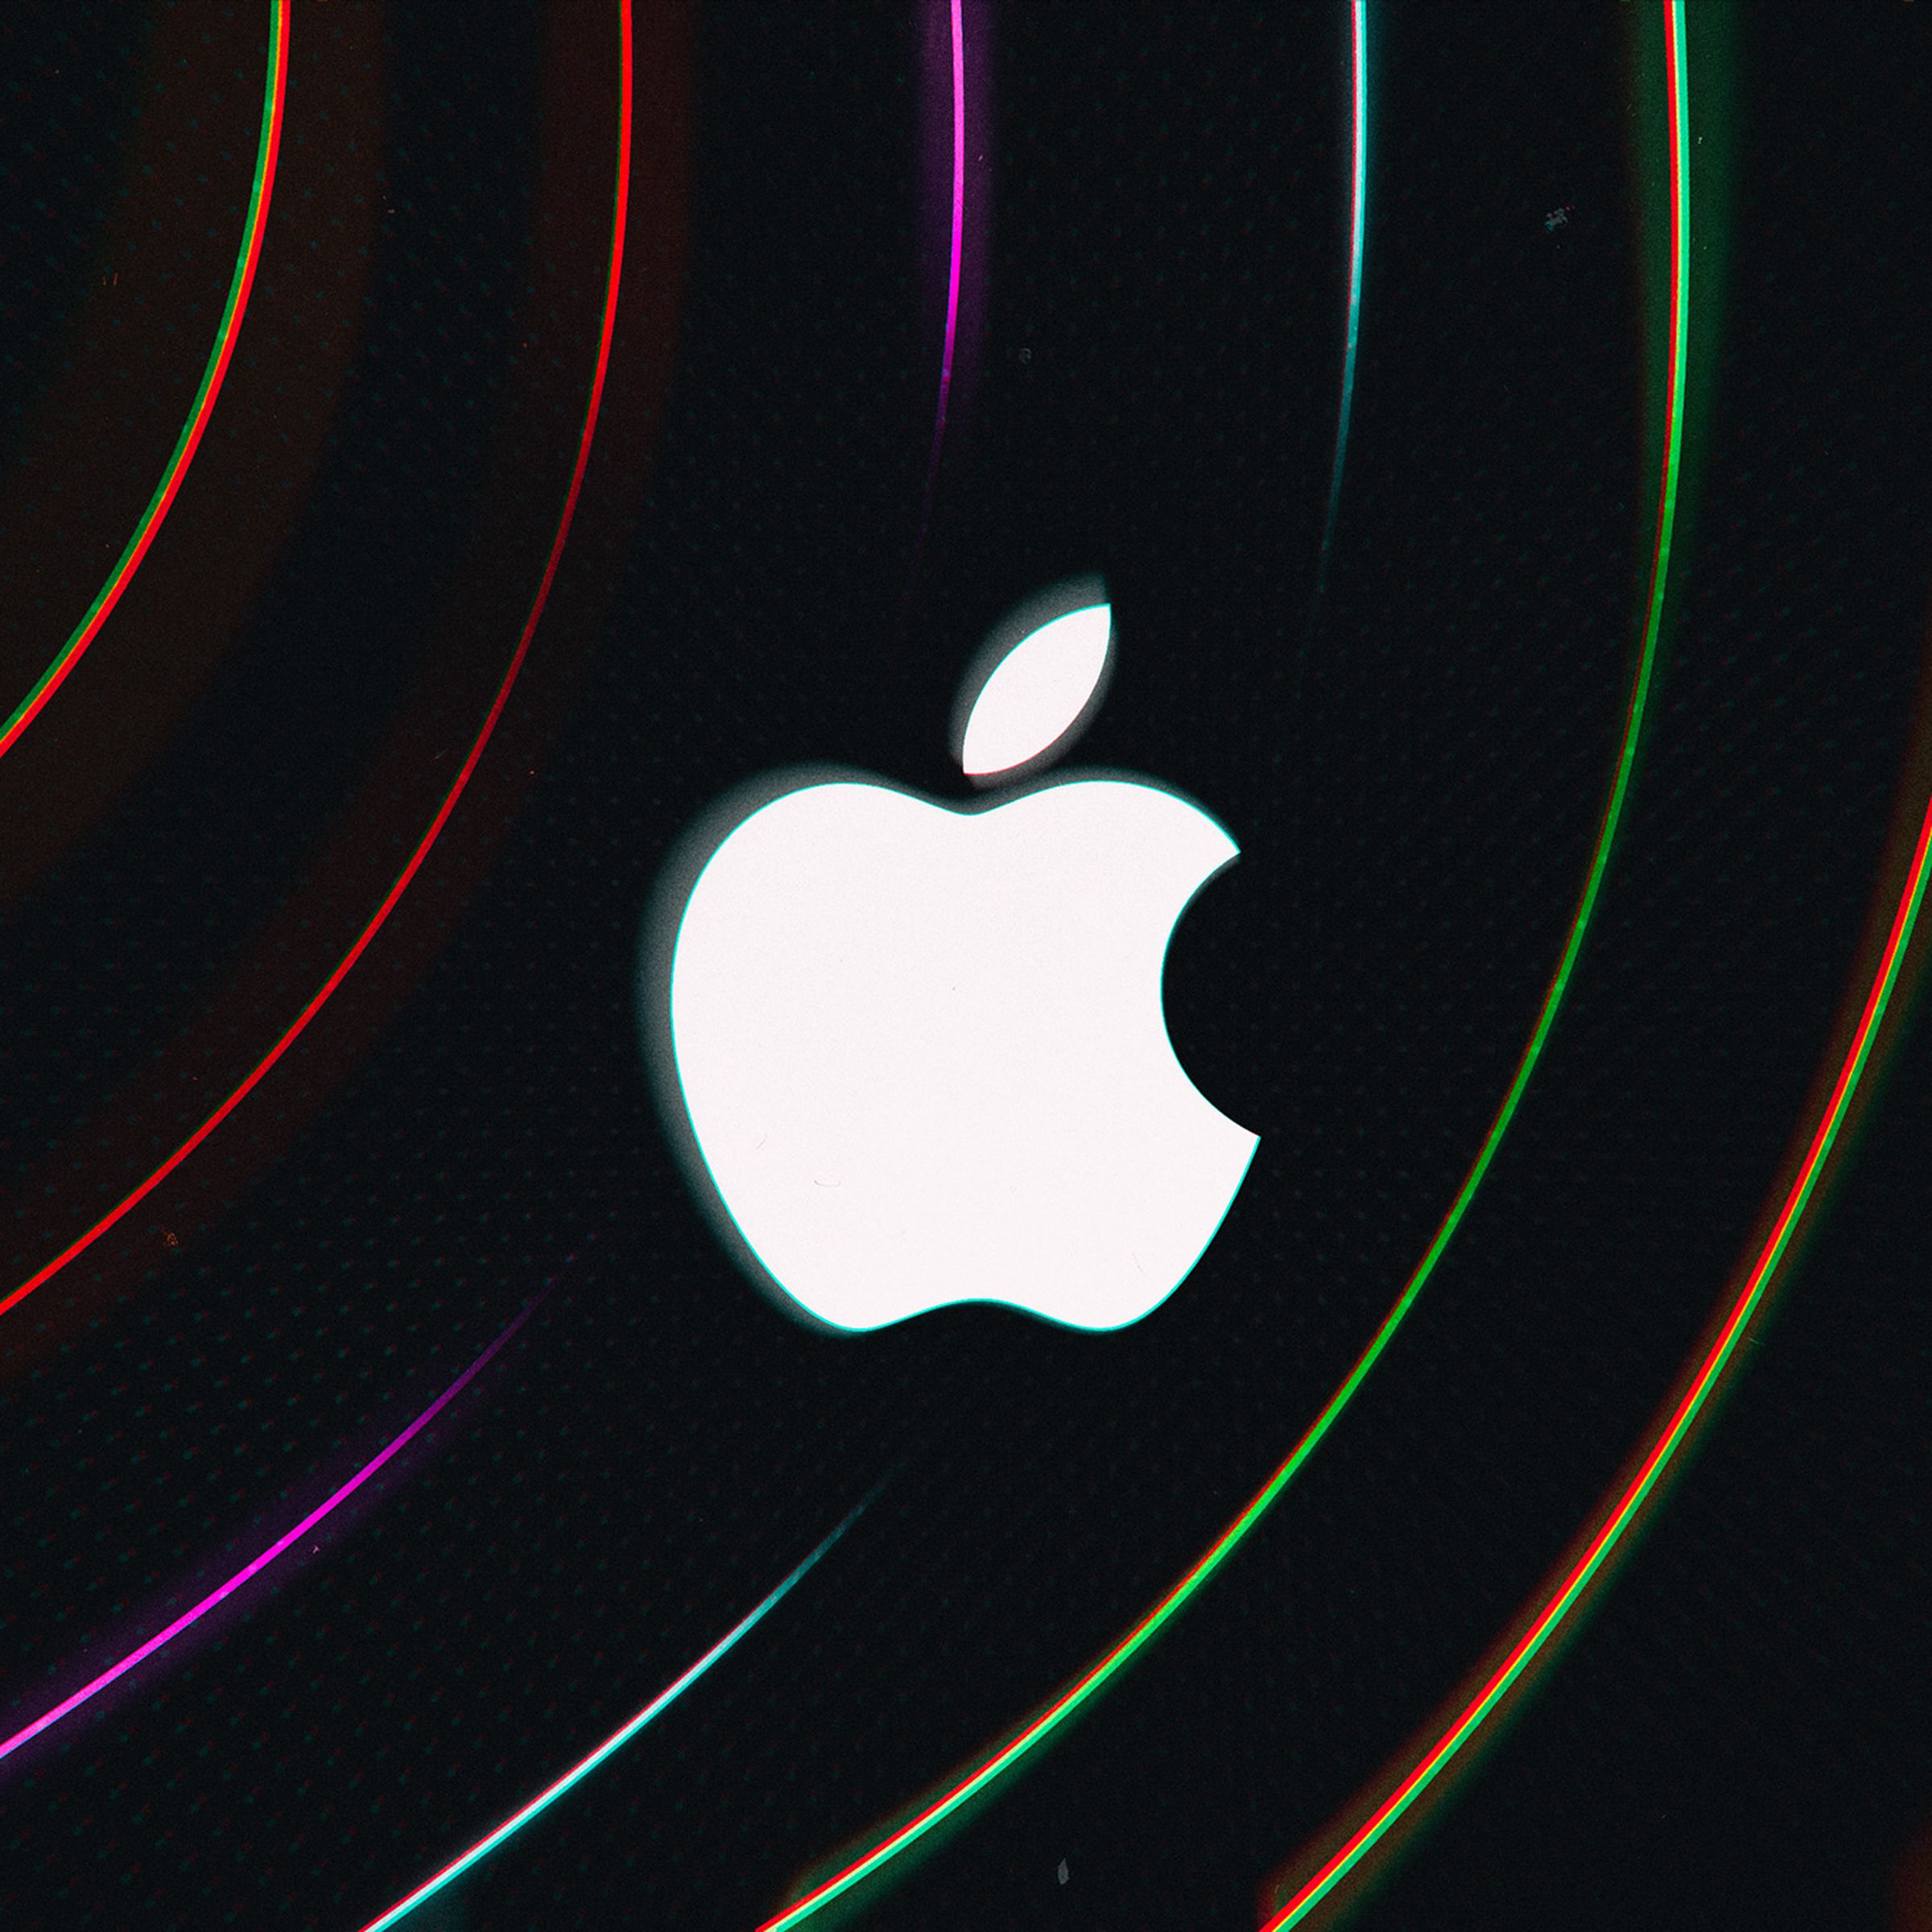 An illustration of the Apple logo.